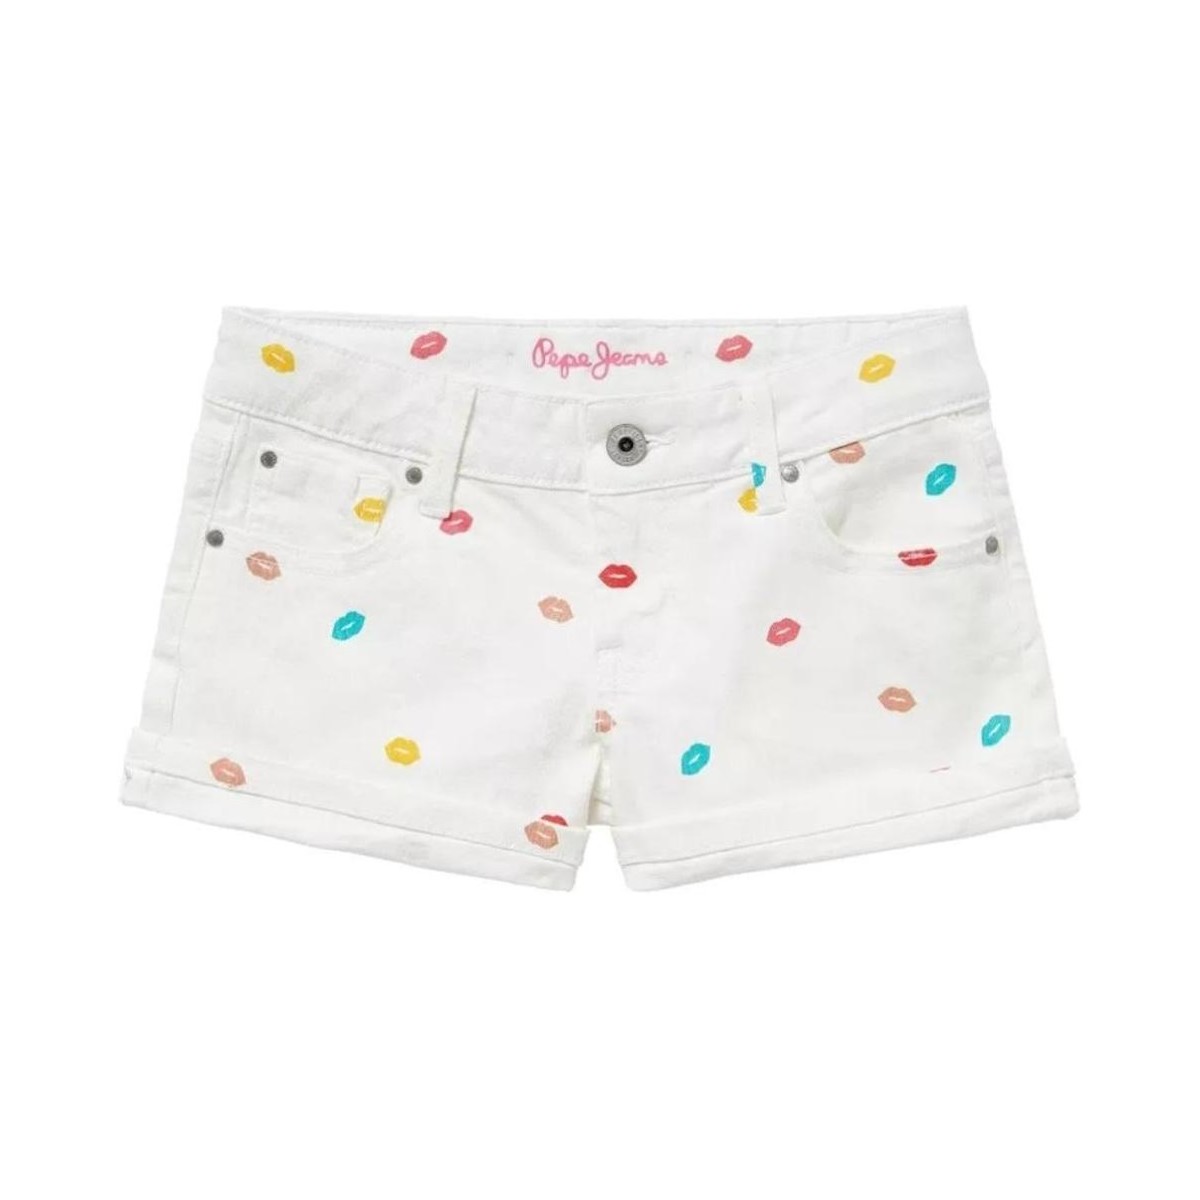 Kleidung Mädchen Shorts / Bermudas Pepe jeans  Weiss